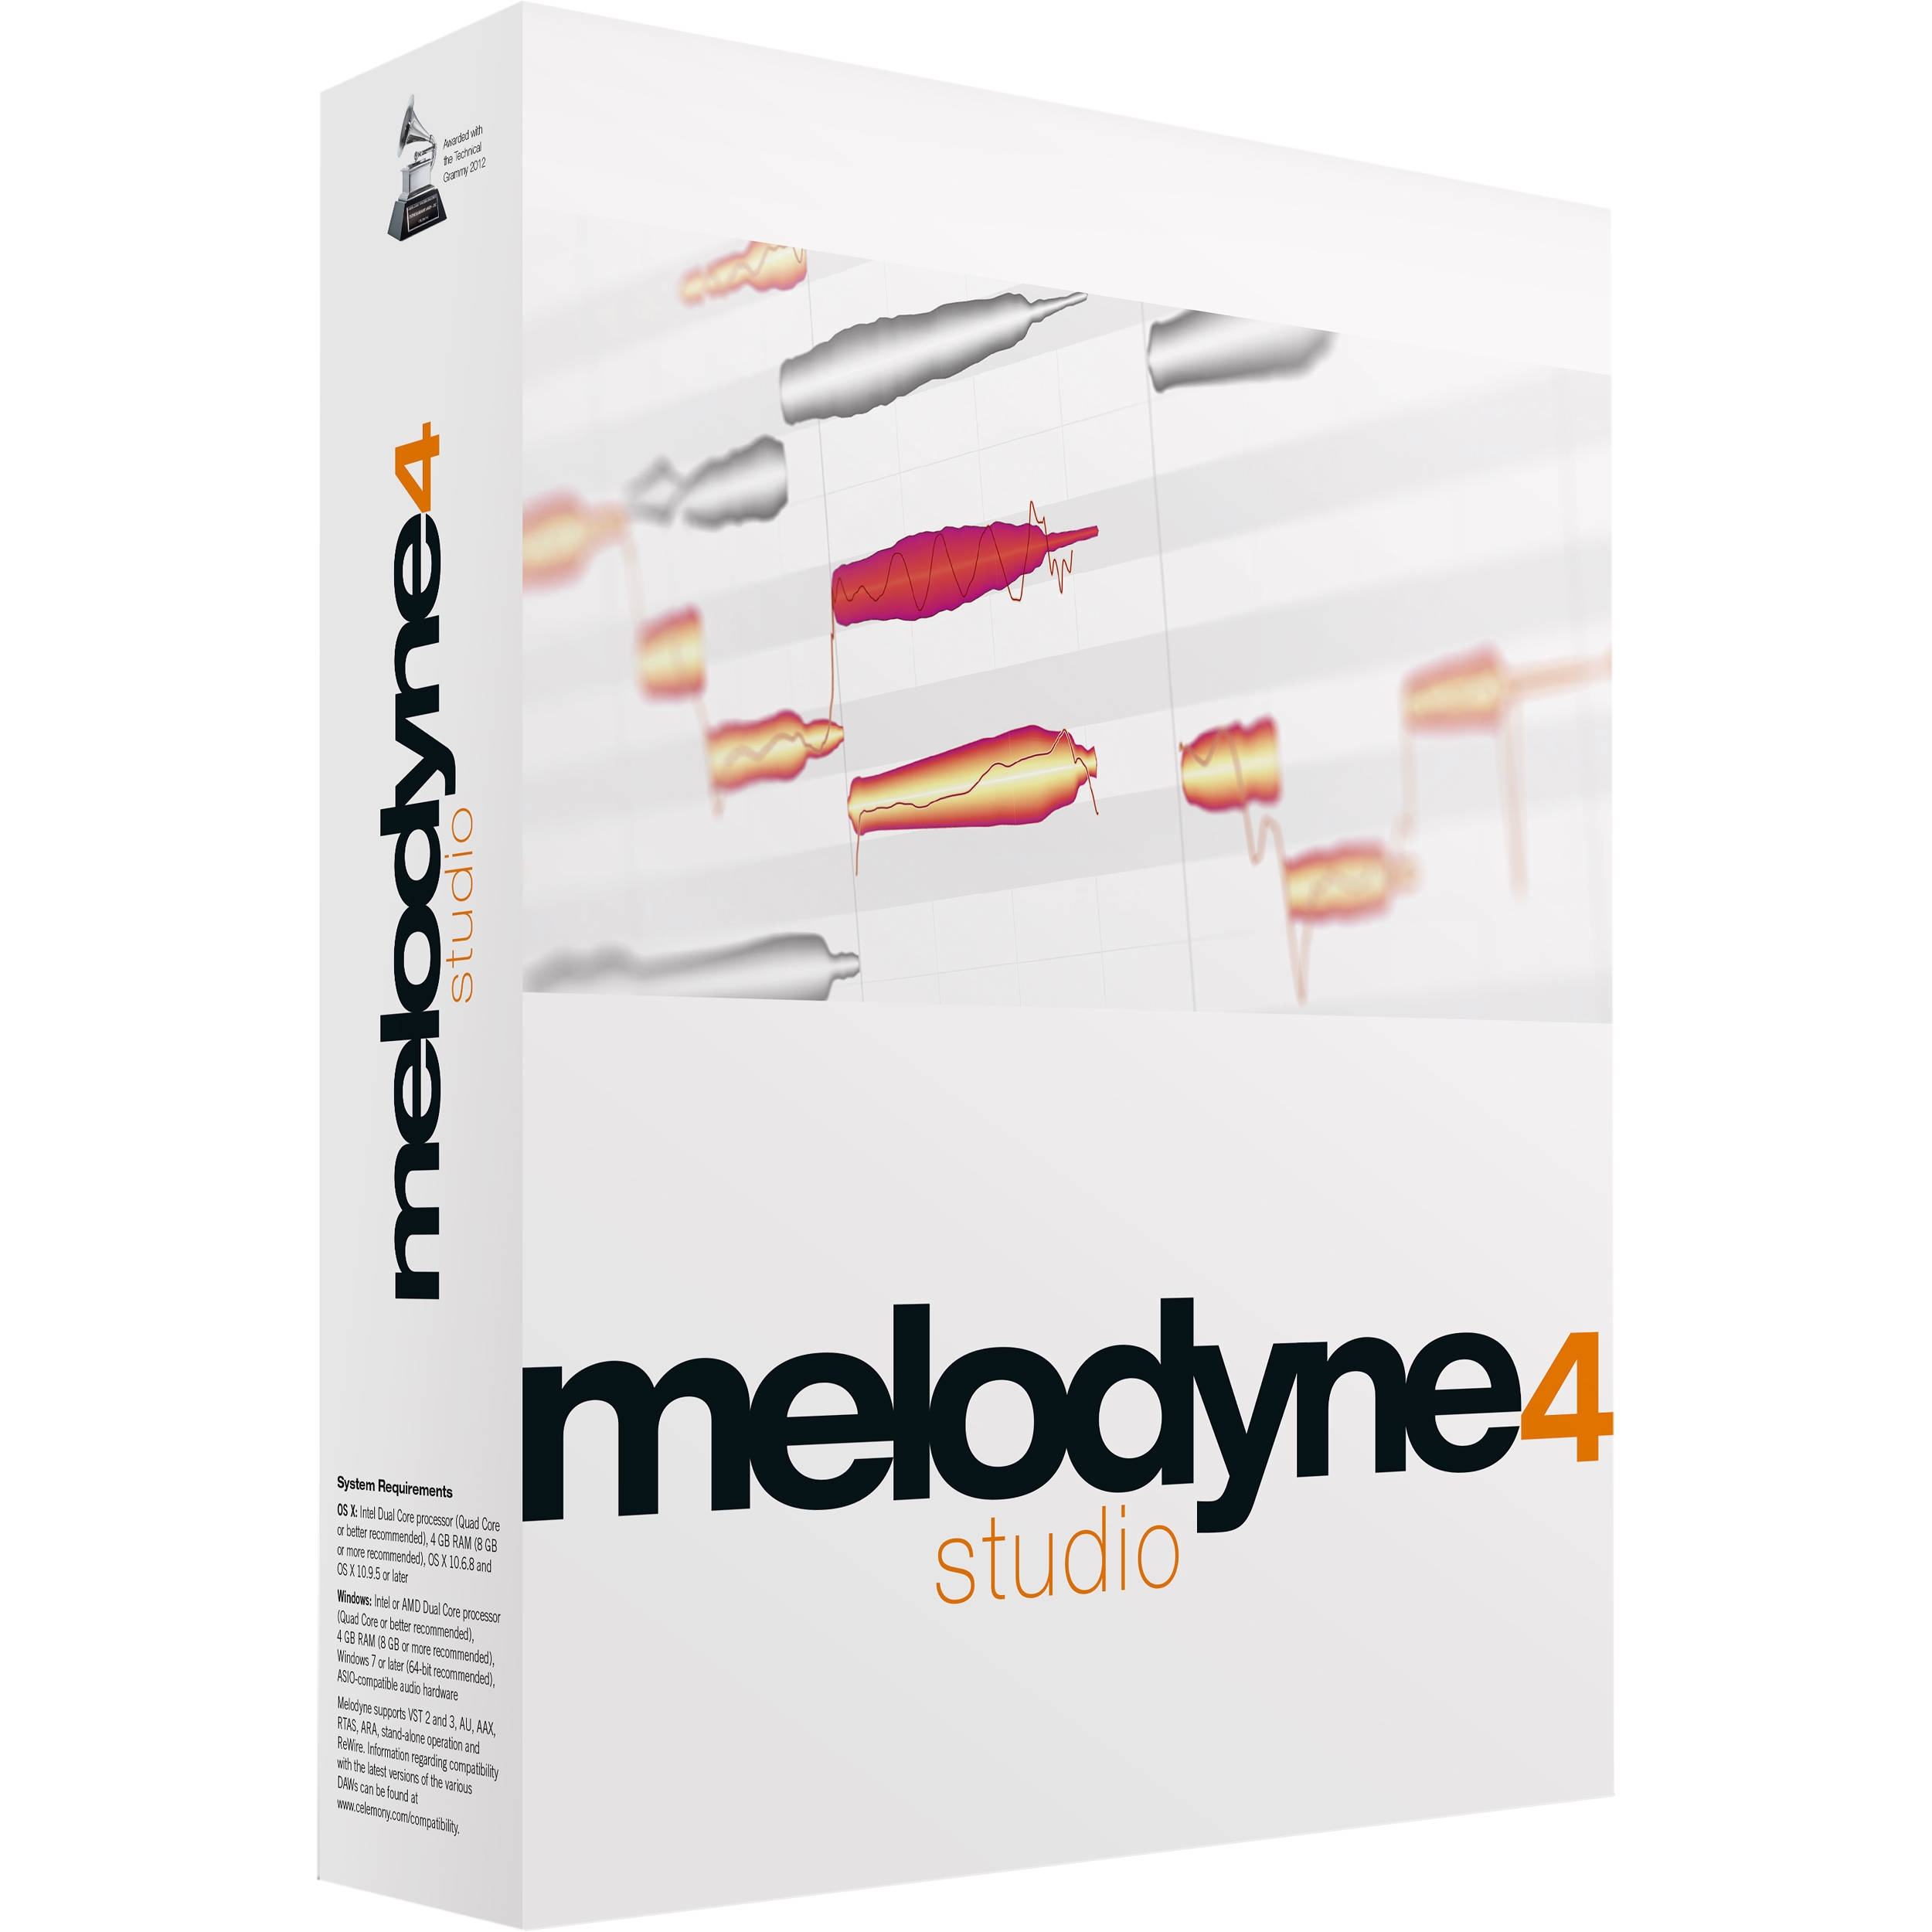 Celemony Melodyne Studio Mac Download